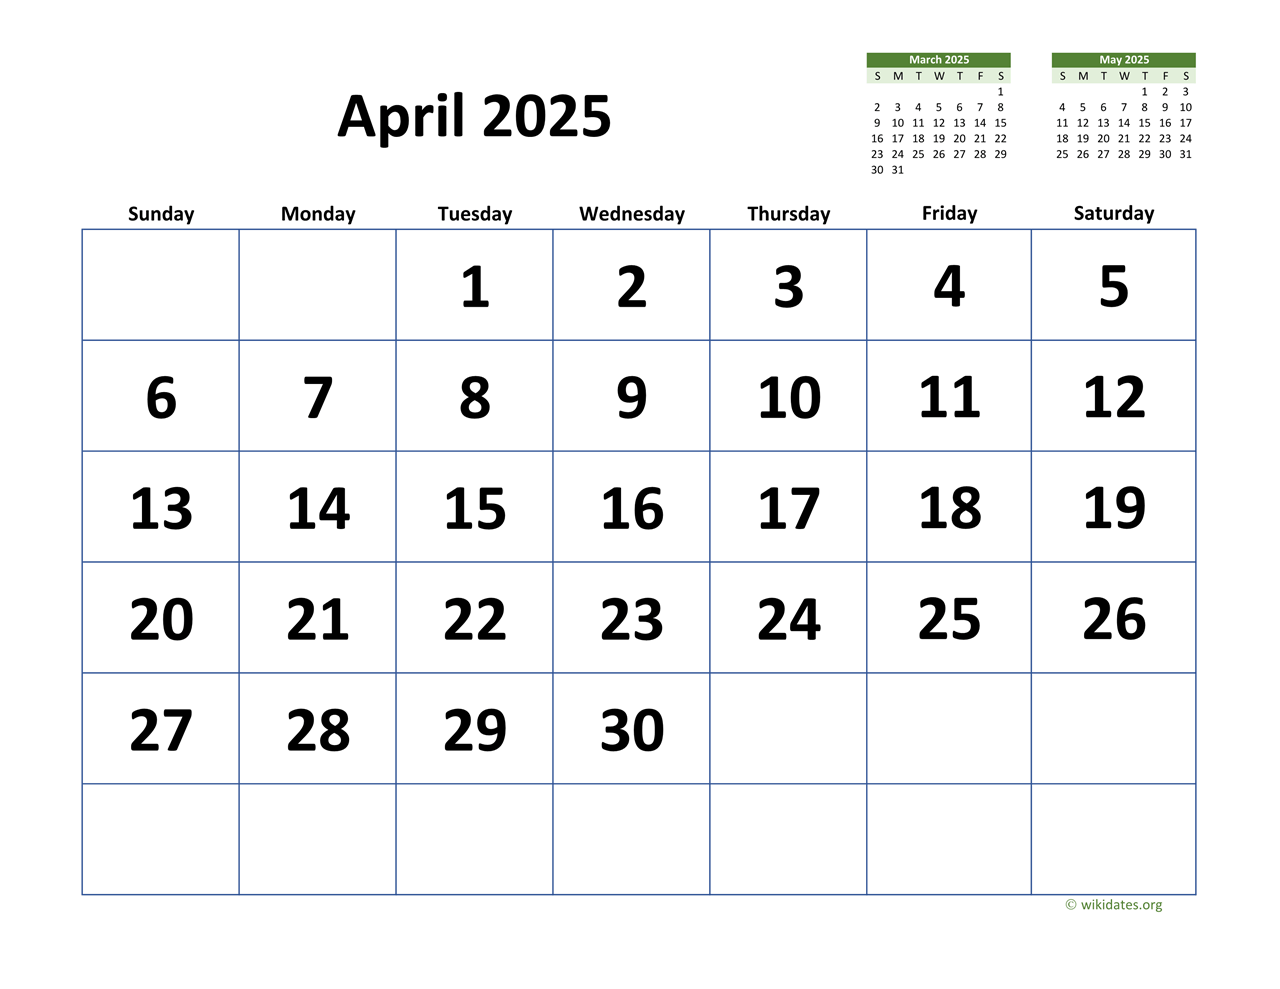 April 2025 Calendar with Extralarge Dates